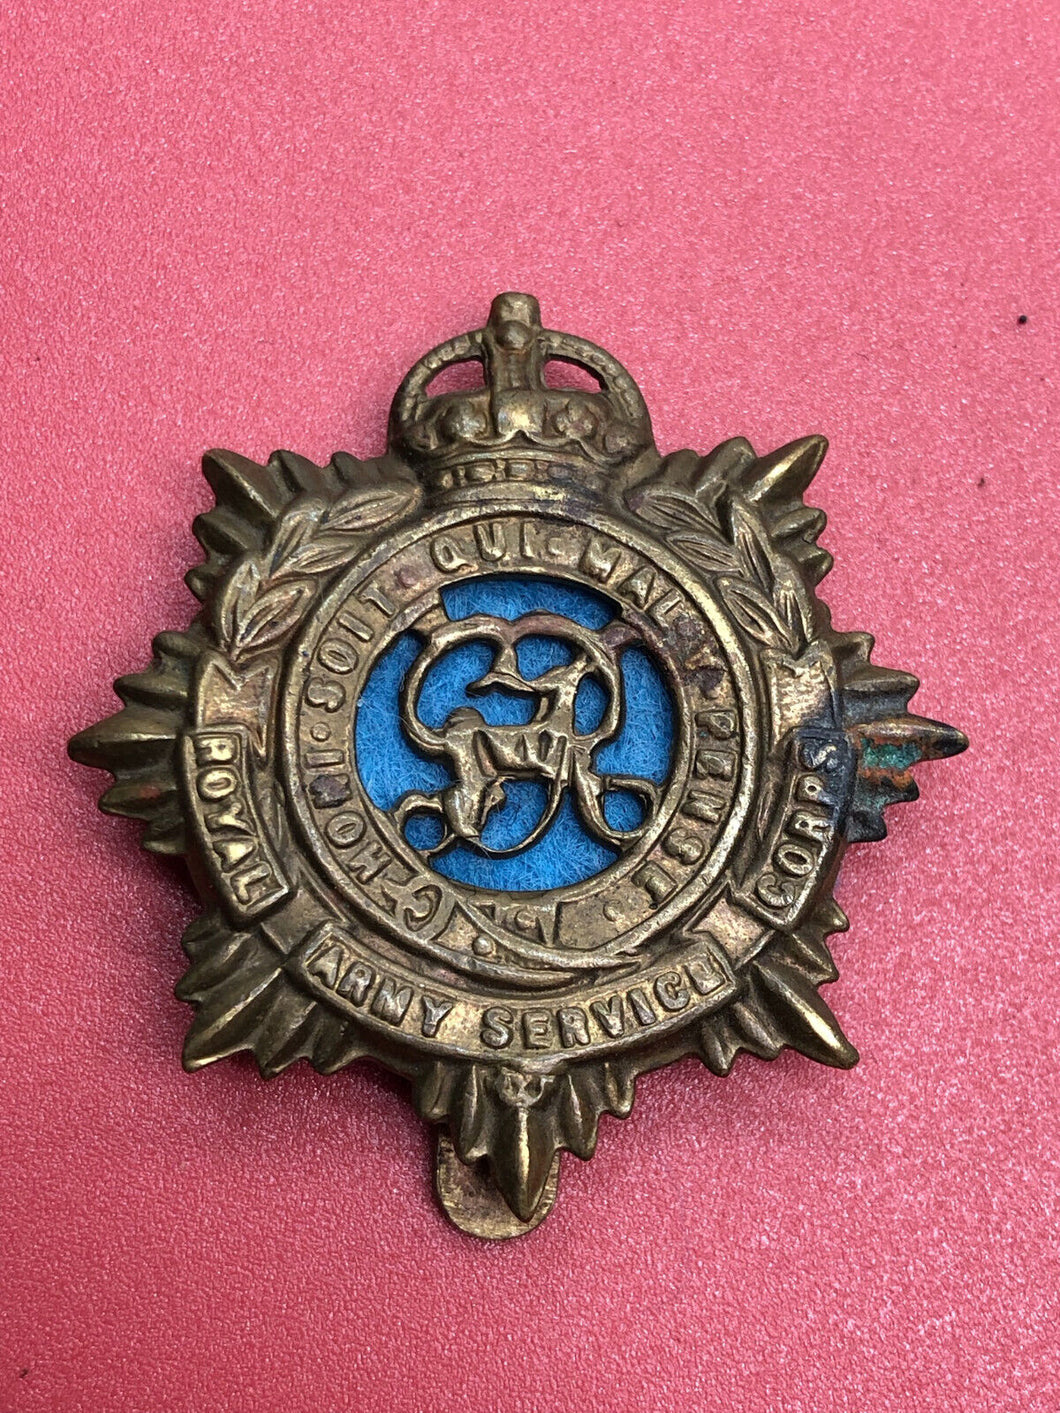 Original WW2 British Army Royal Army Service Corps RASC Cap Badge